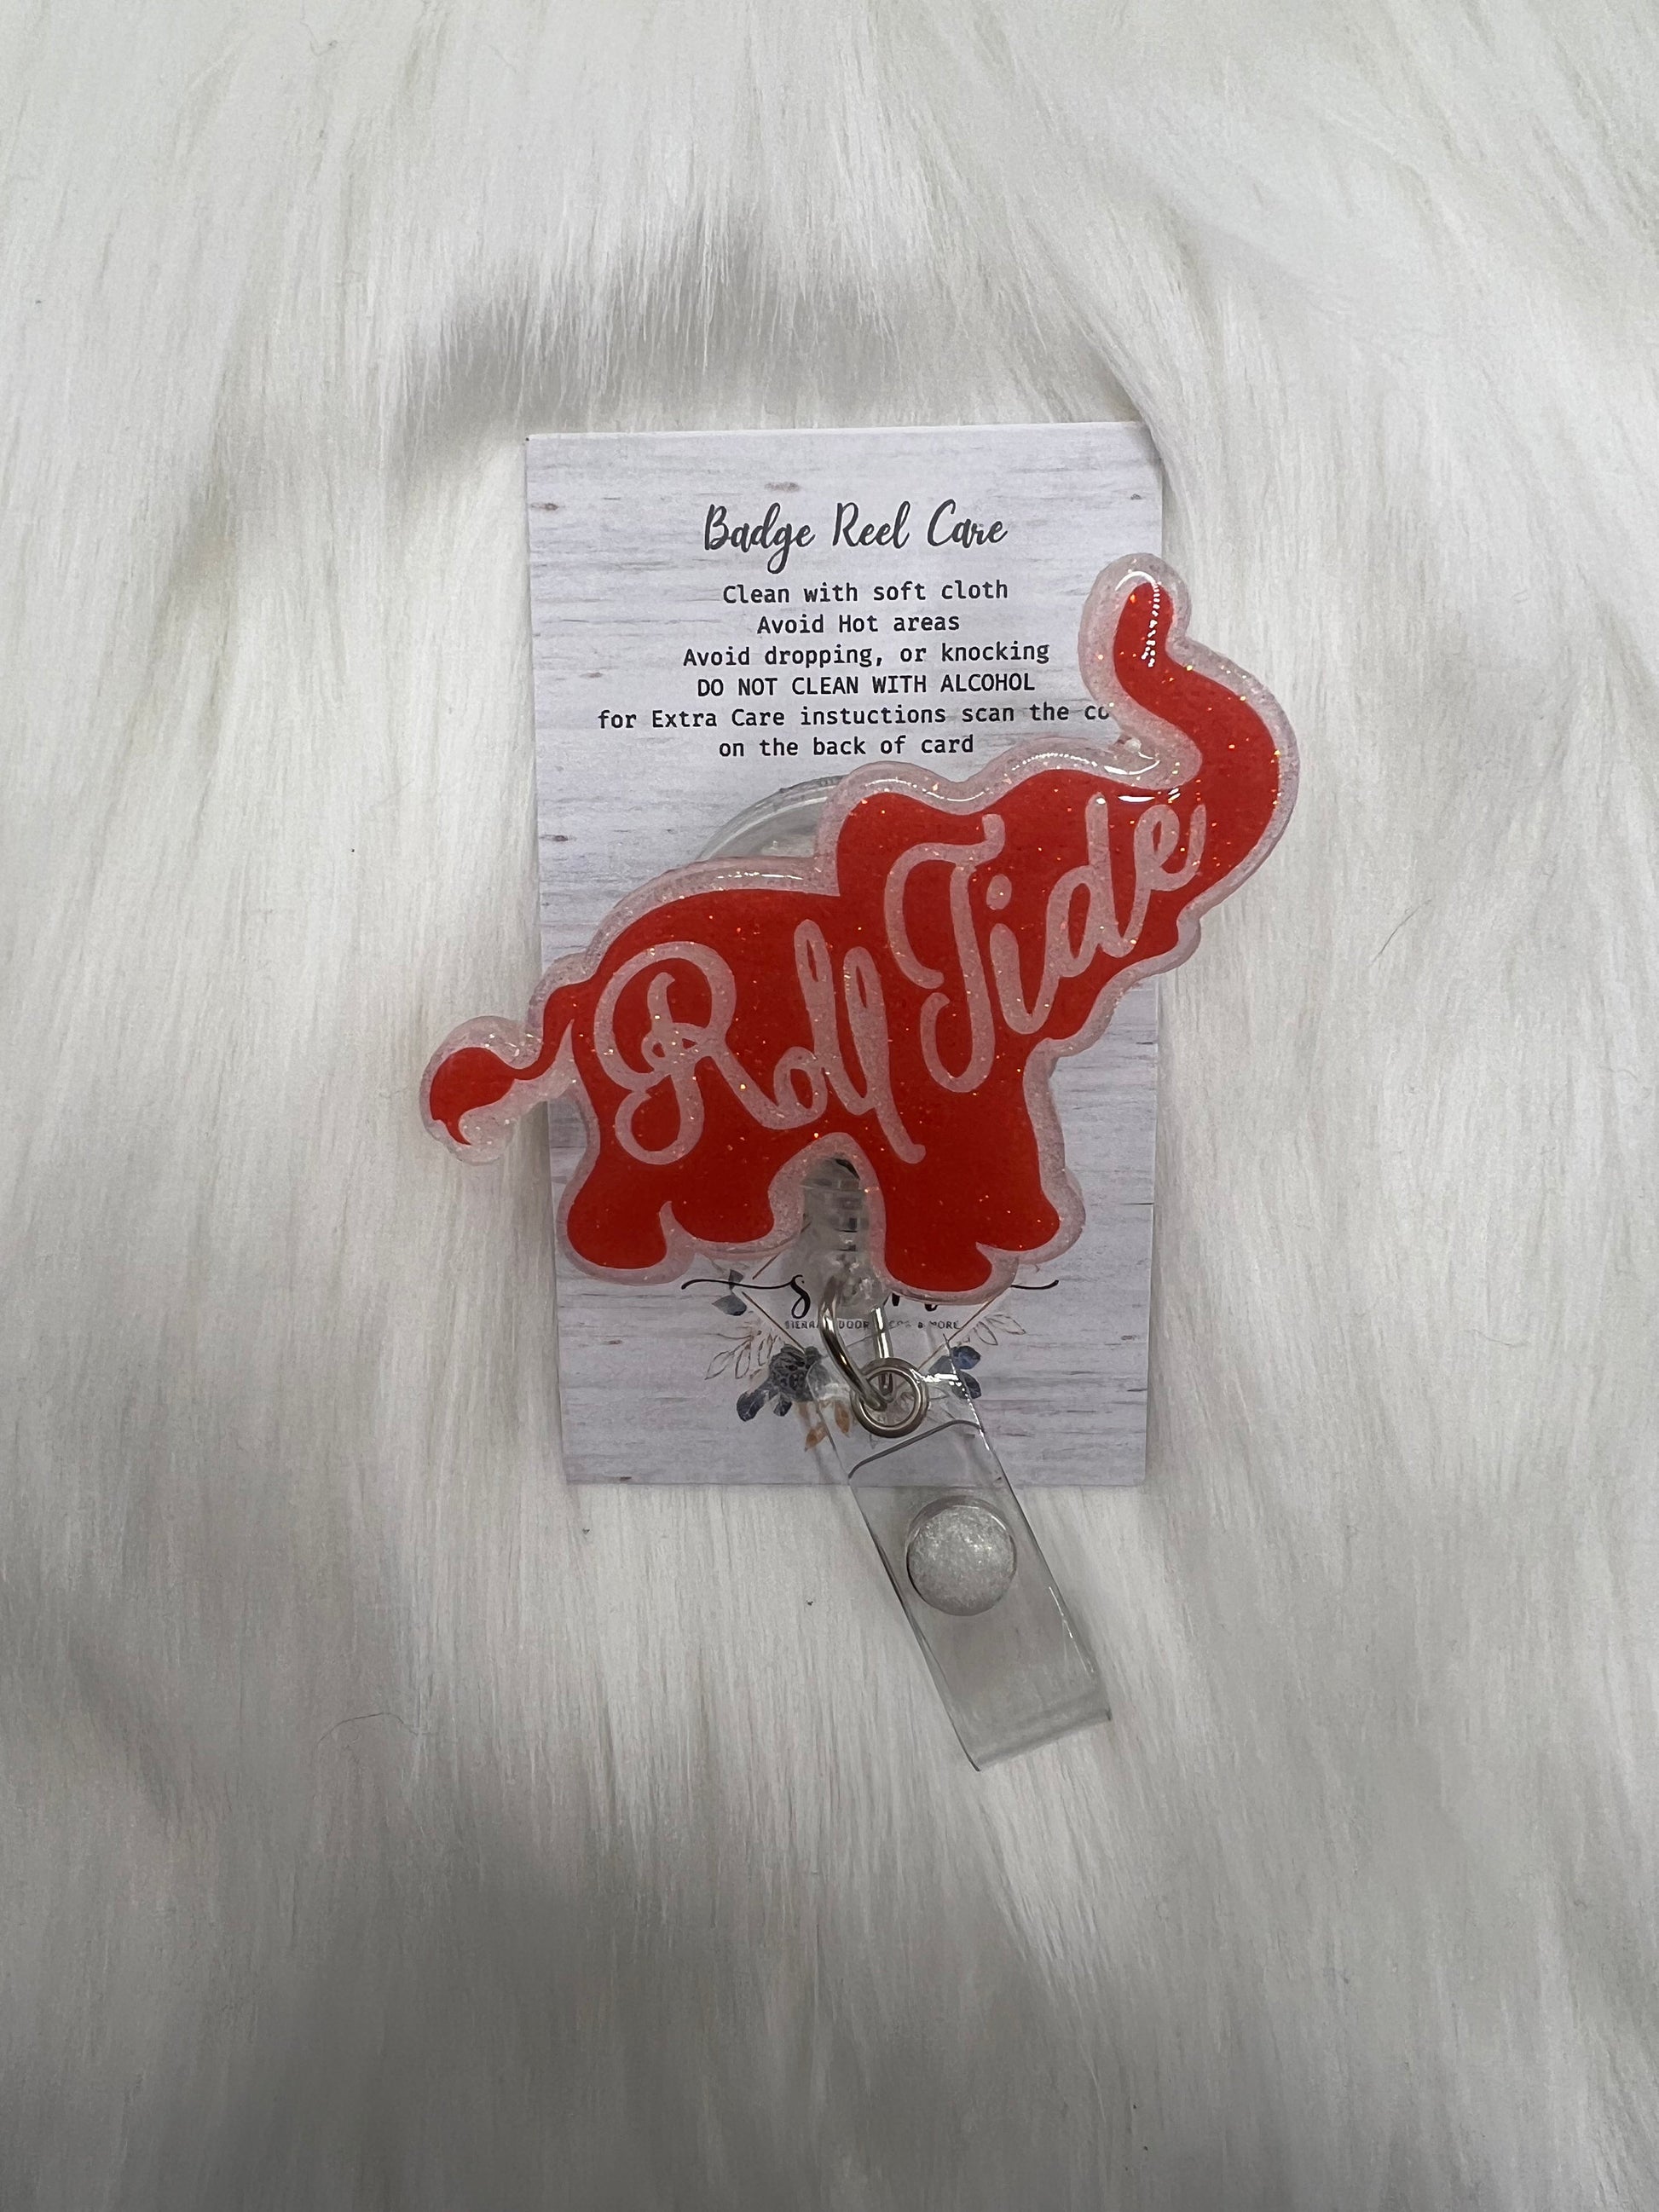 Roll tide badge reel- elephant badge- football badge reel- mri safe- lanyard- interchangeable badge- gifts for her- glitter- cute badge reel